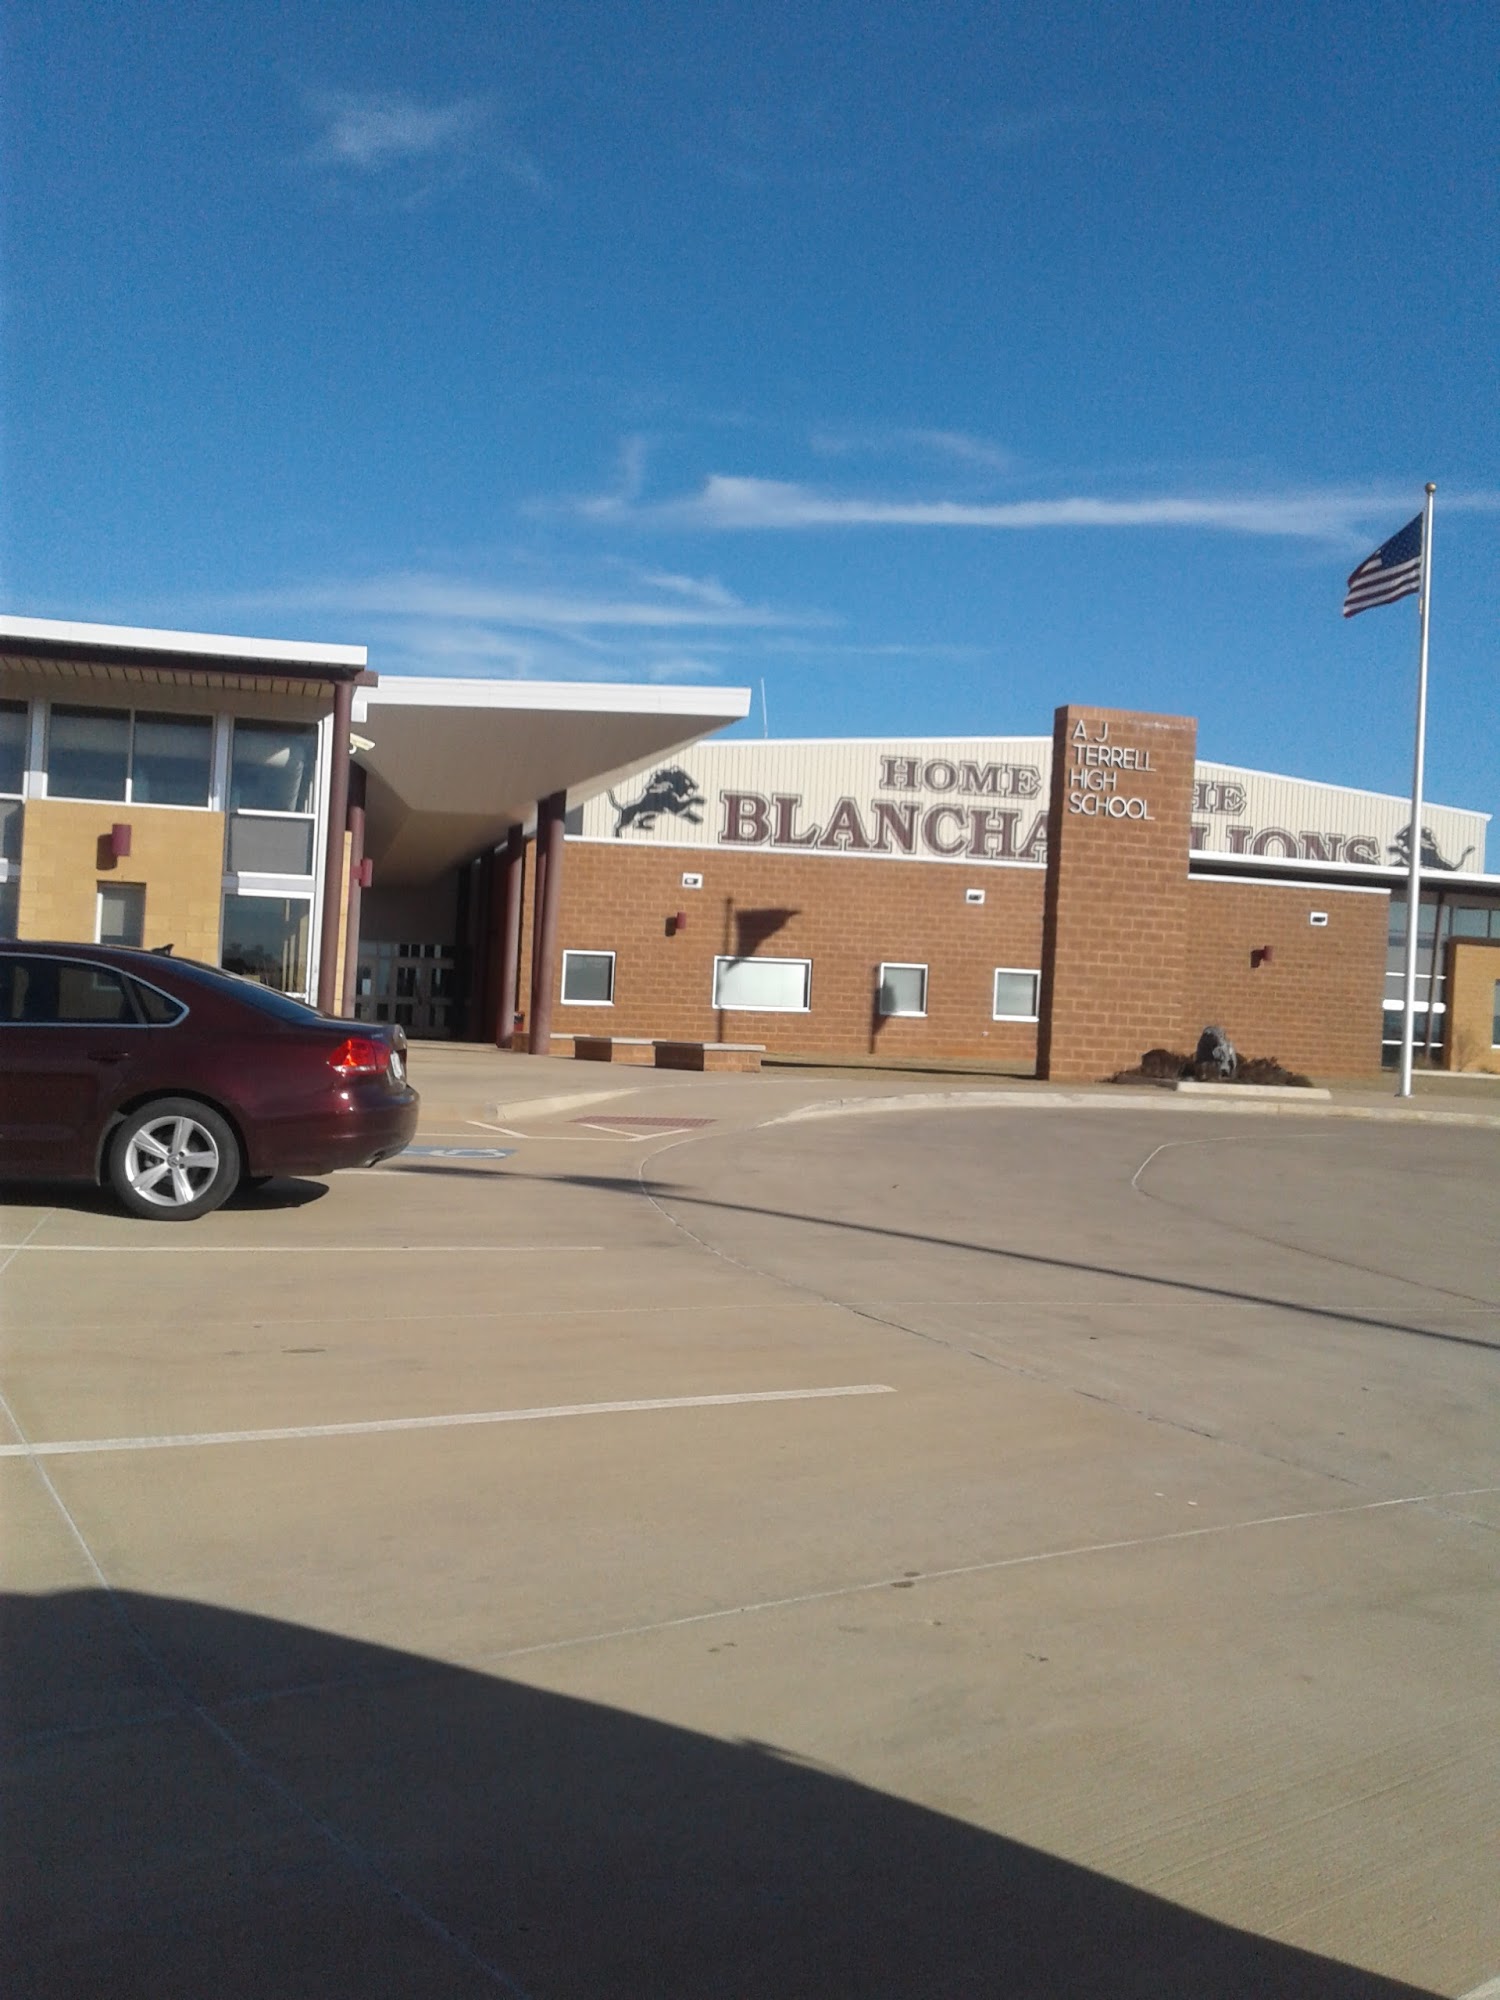 Blanchard High School